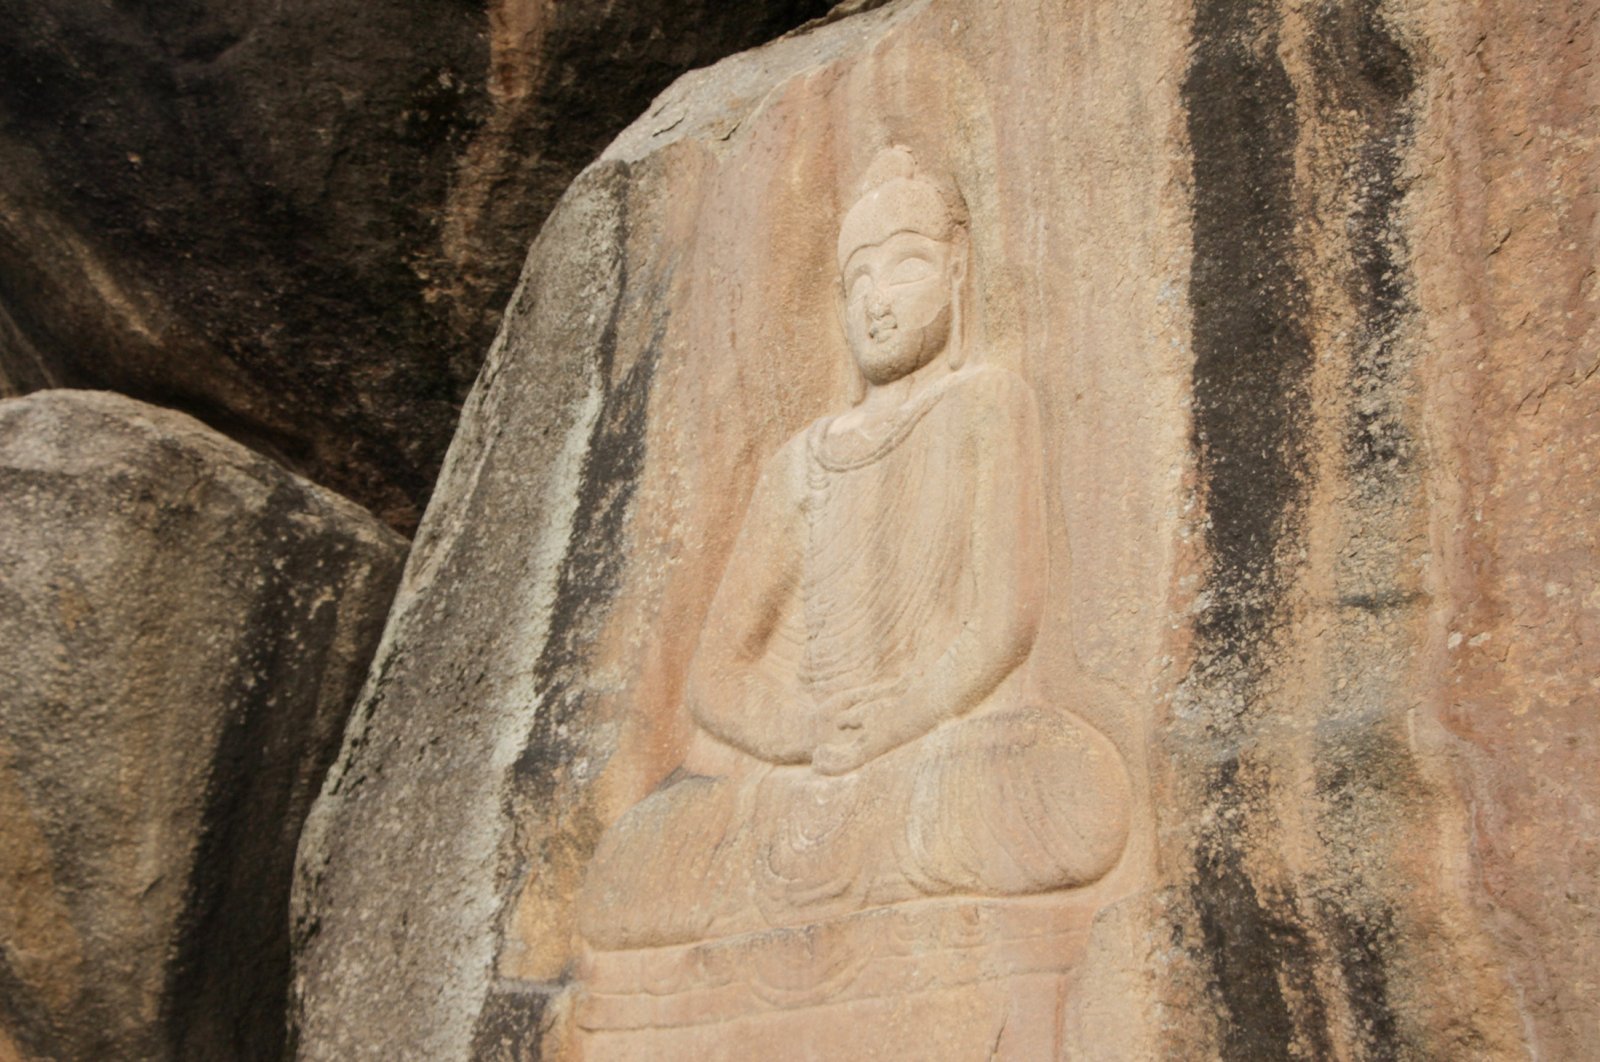 A sixth-century Buddhist rock carving in Swat, Pakistan. (Shutterstock)